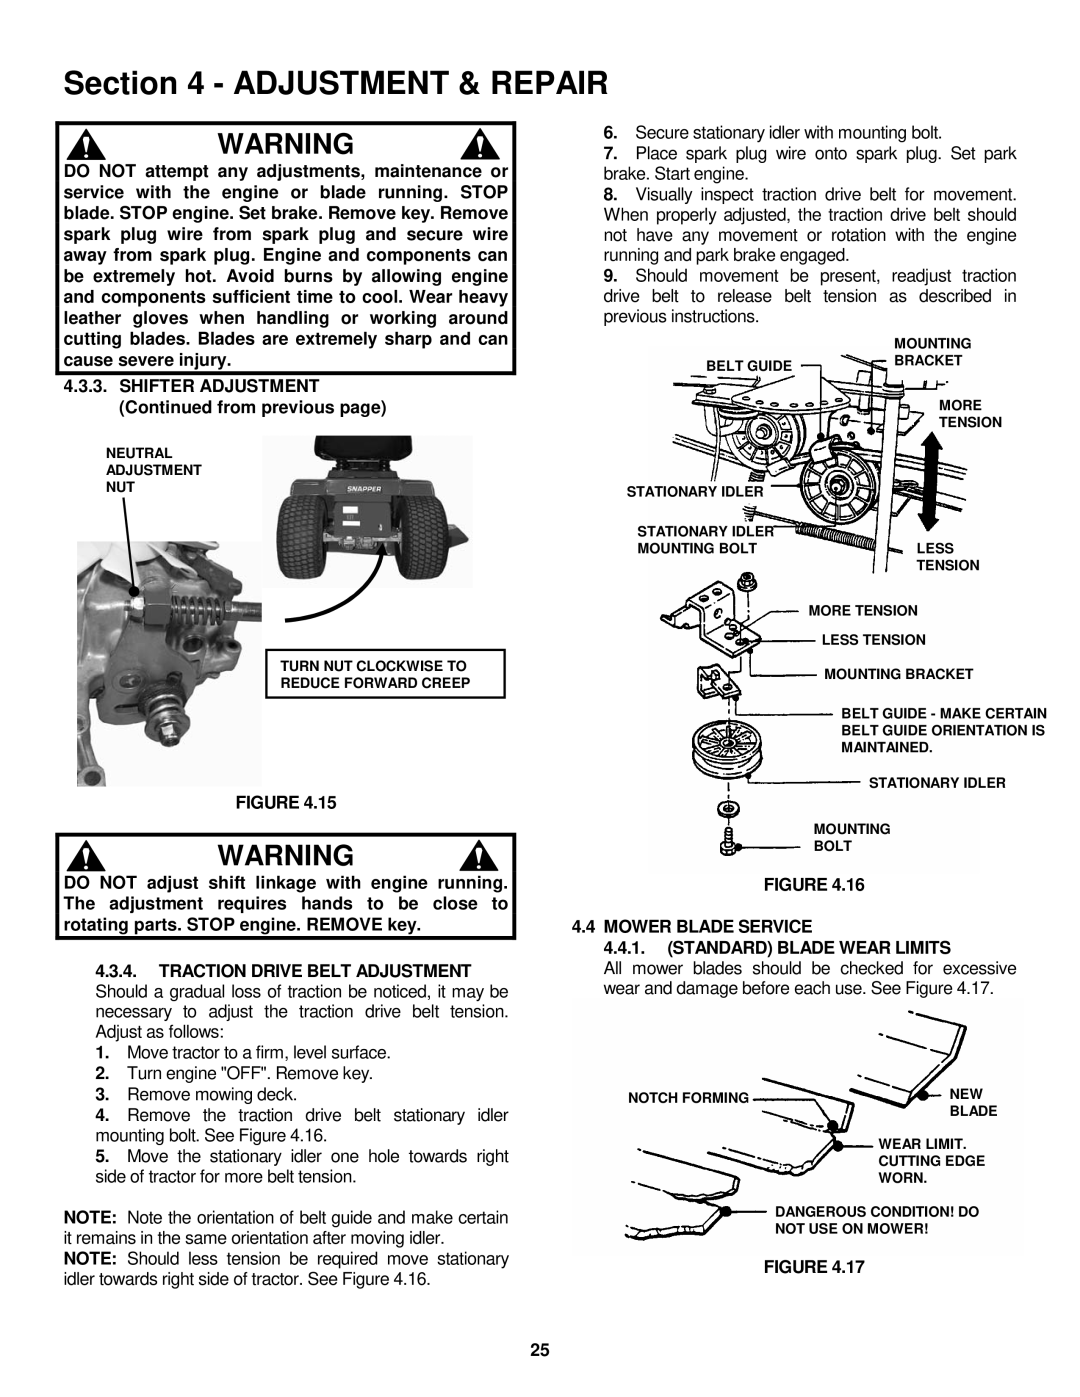 Snapper ELT150H33IBV important safety instructions Mower Blade Service Standard Blade Wear Limits 